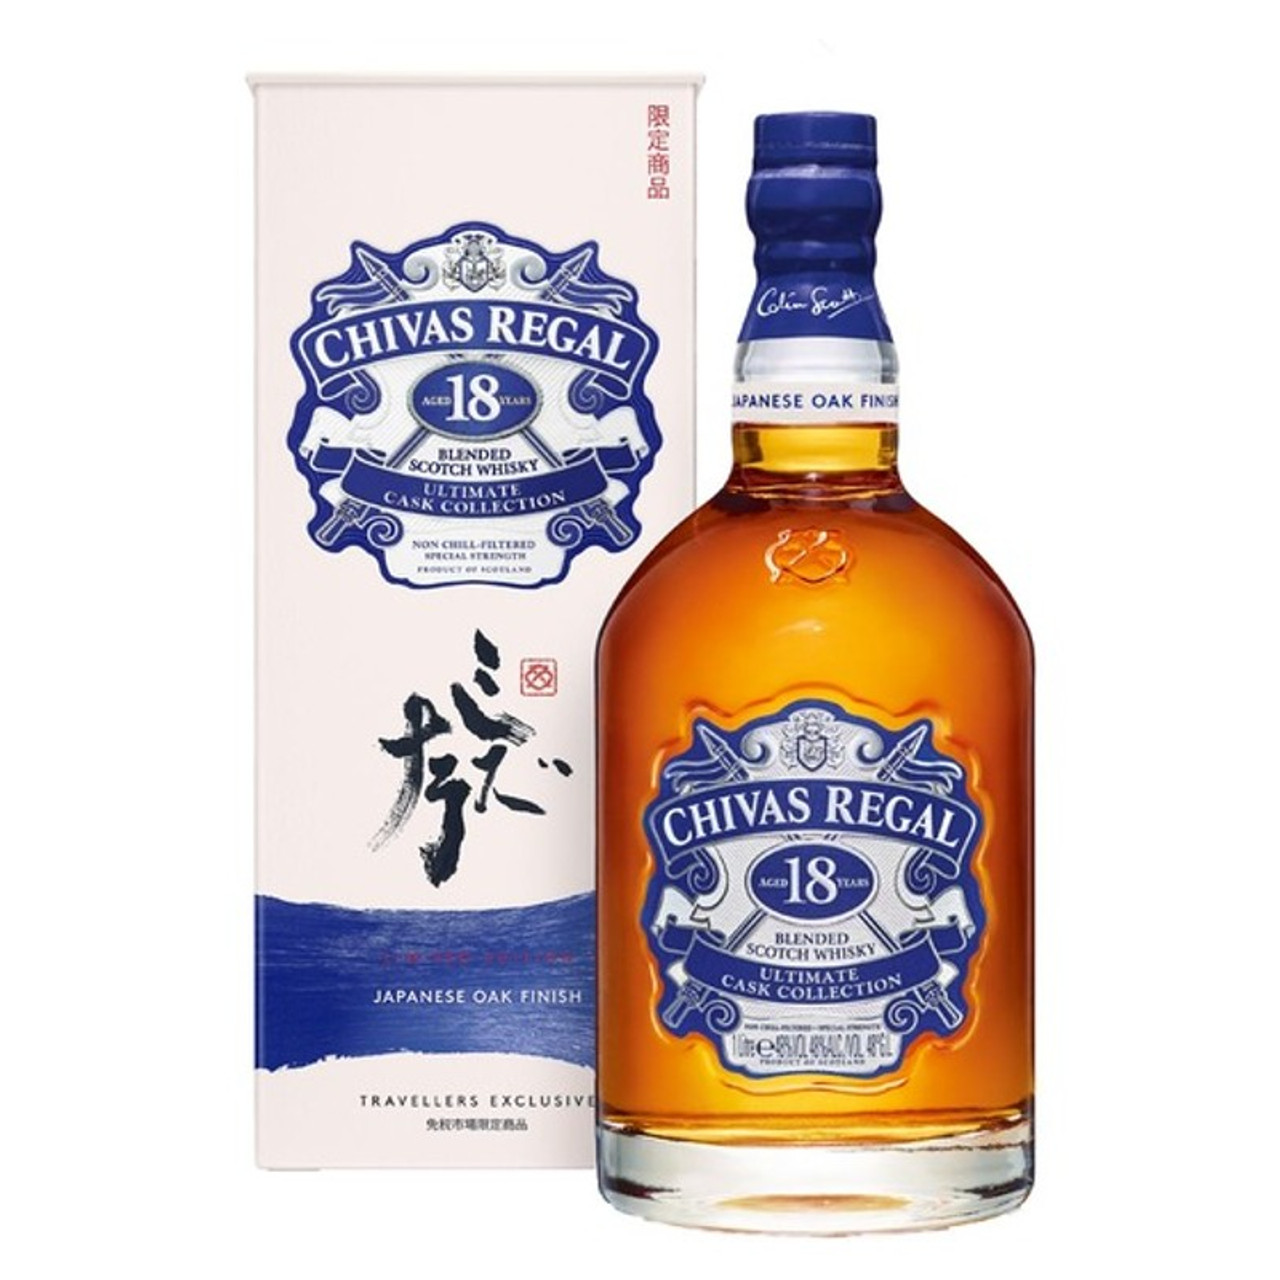 Chivas Regal 18 Japanese Oak Finish Blended Scotch Whisky 1L